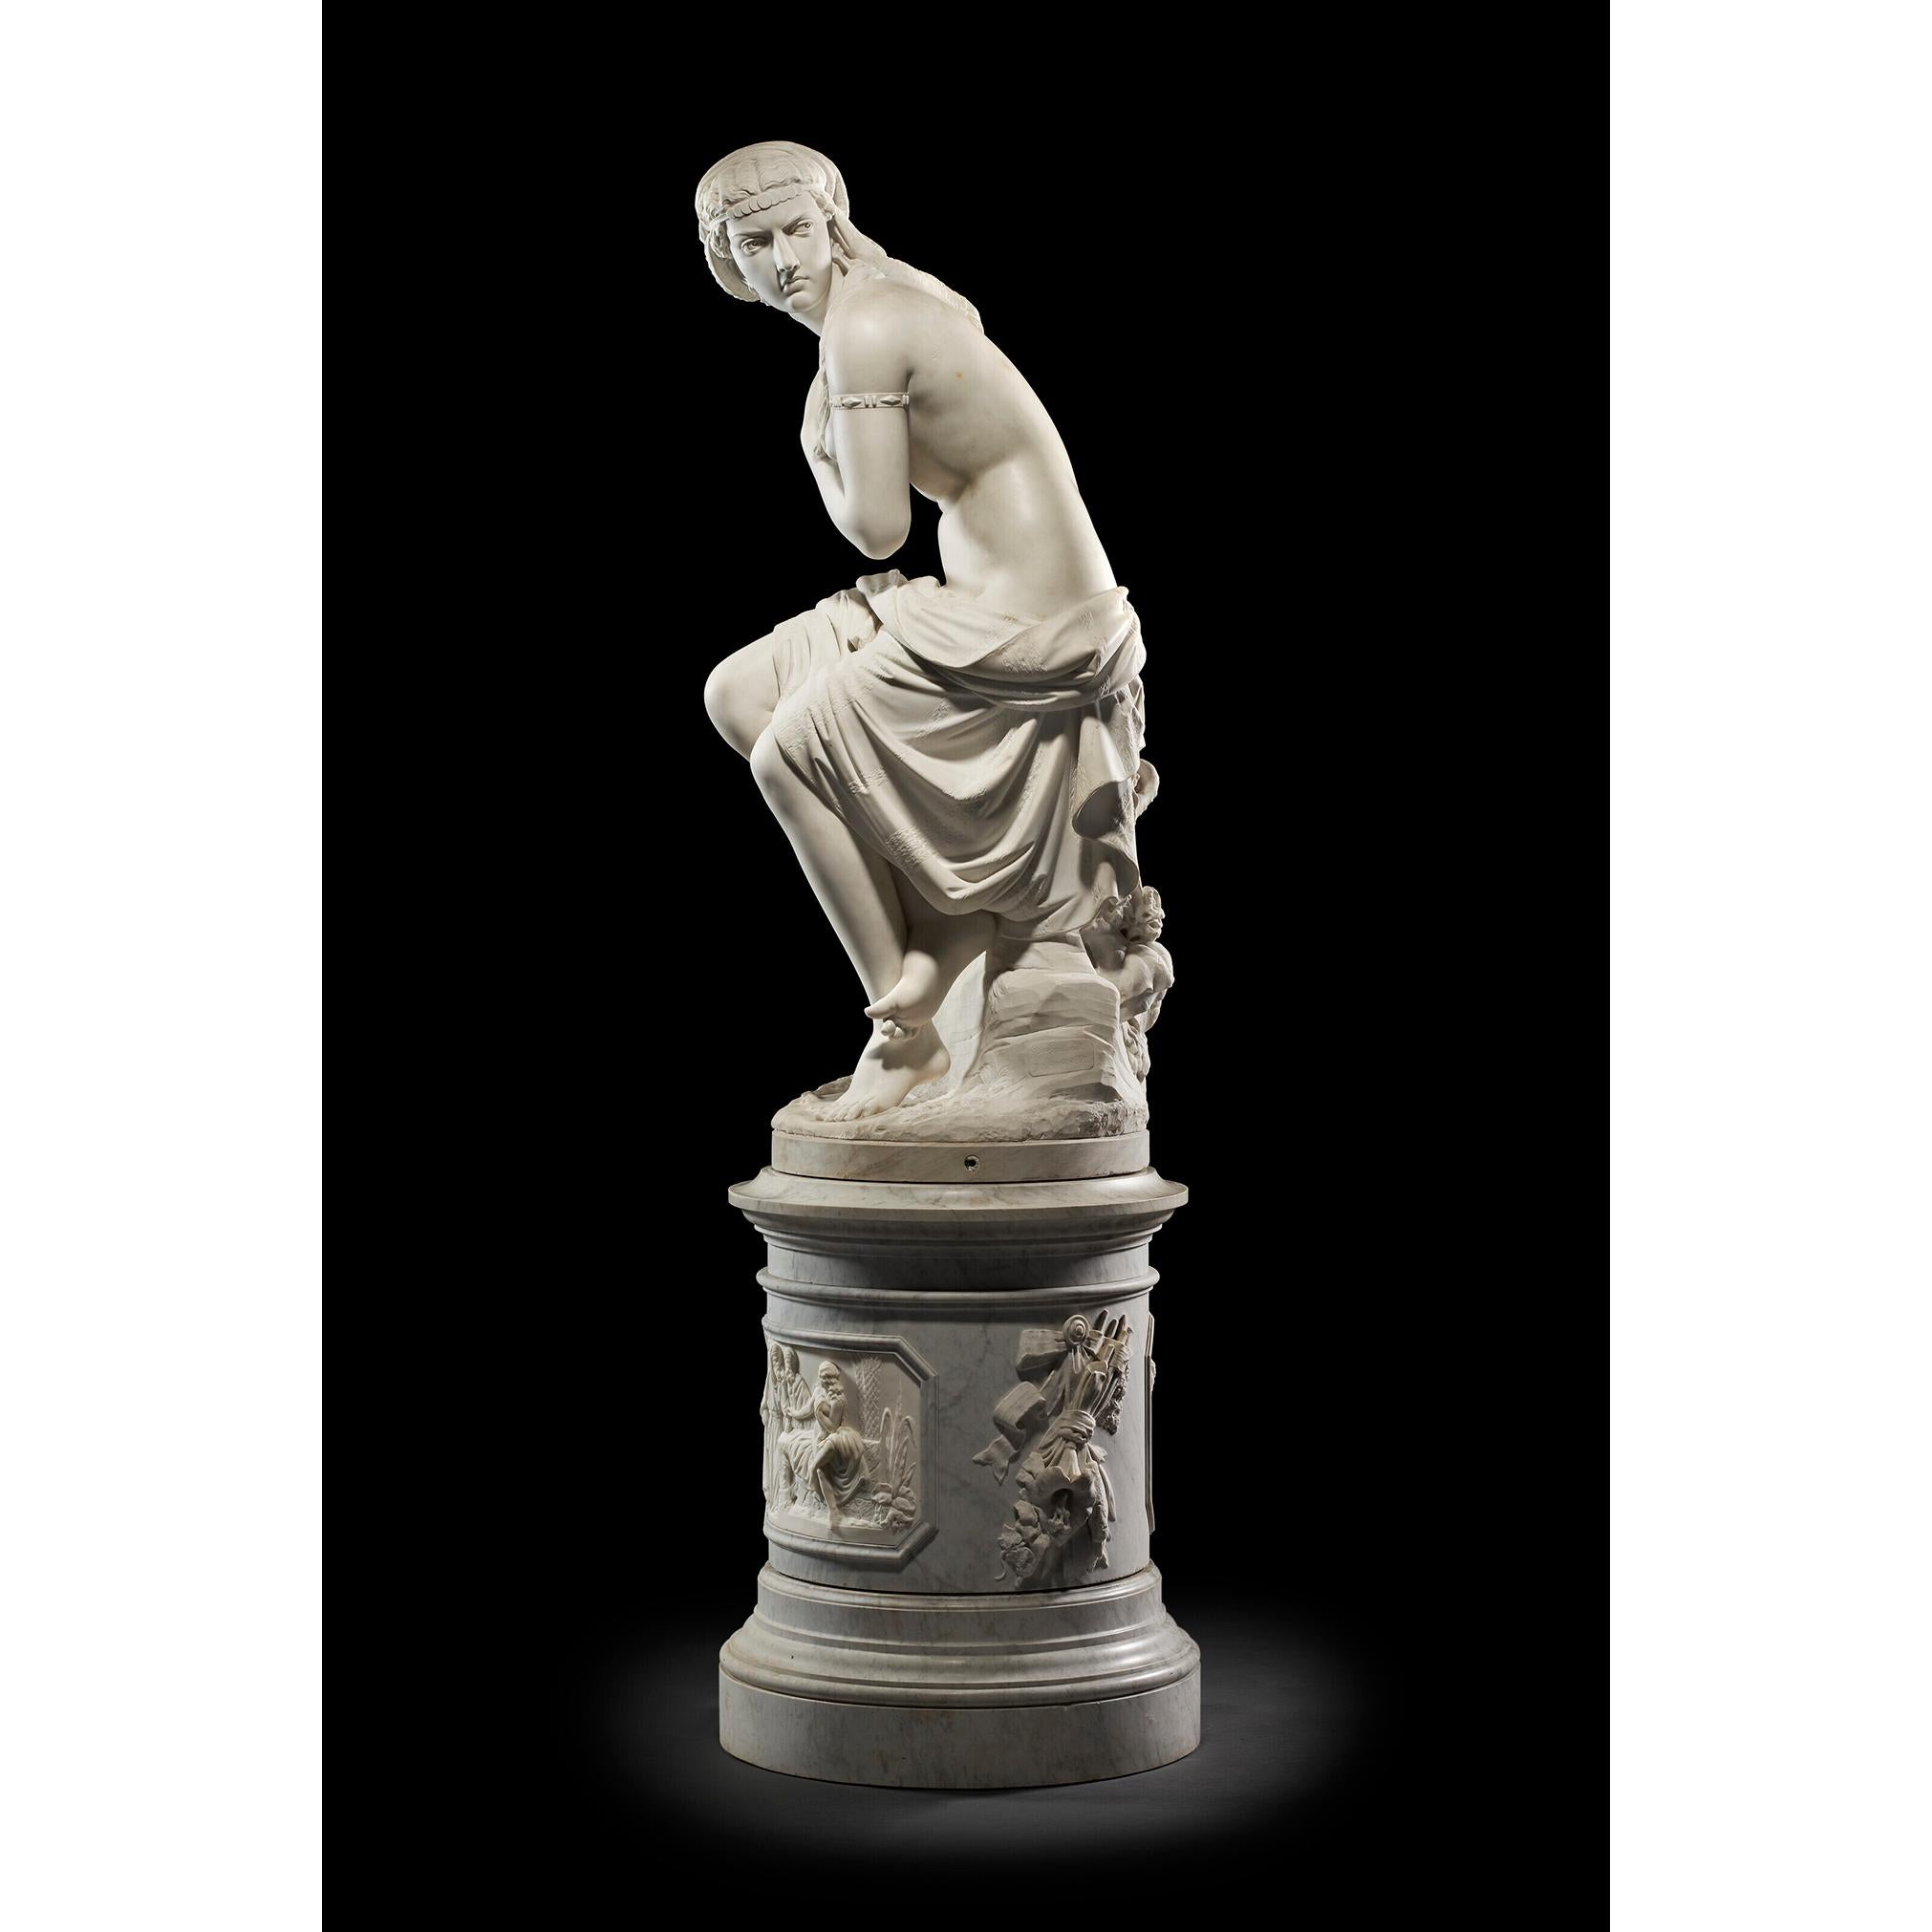 Susanna al bagno, italienische Marmorstatue von Lombardi mit Reliefskulptursockel  – Sculpture von Giovan Domenico Lombardi Omino